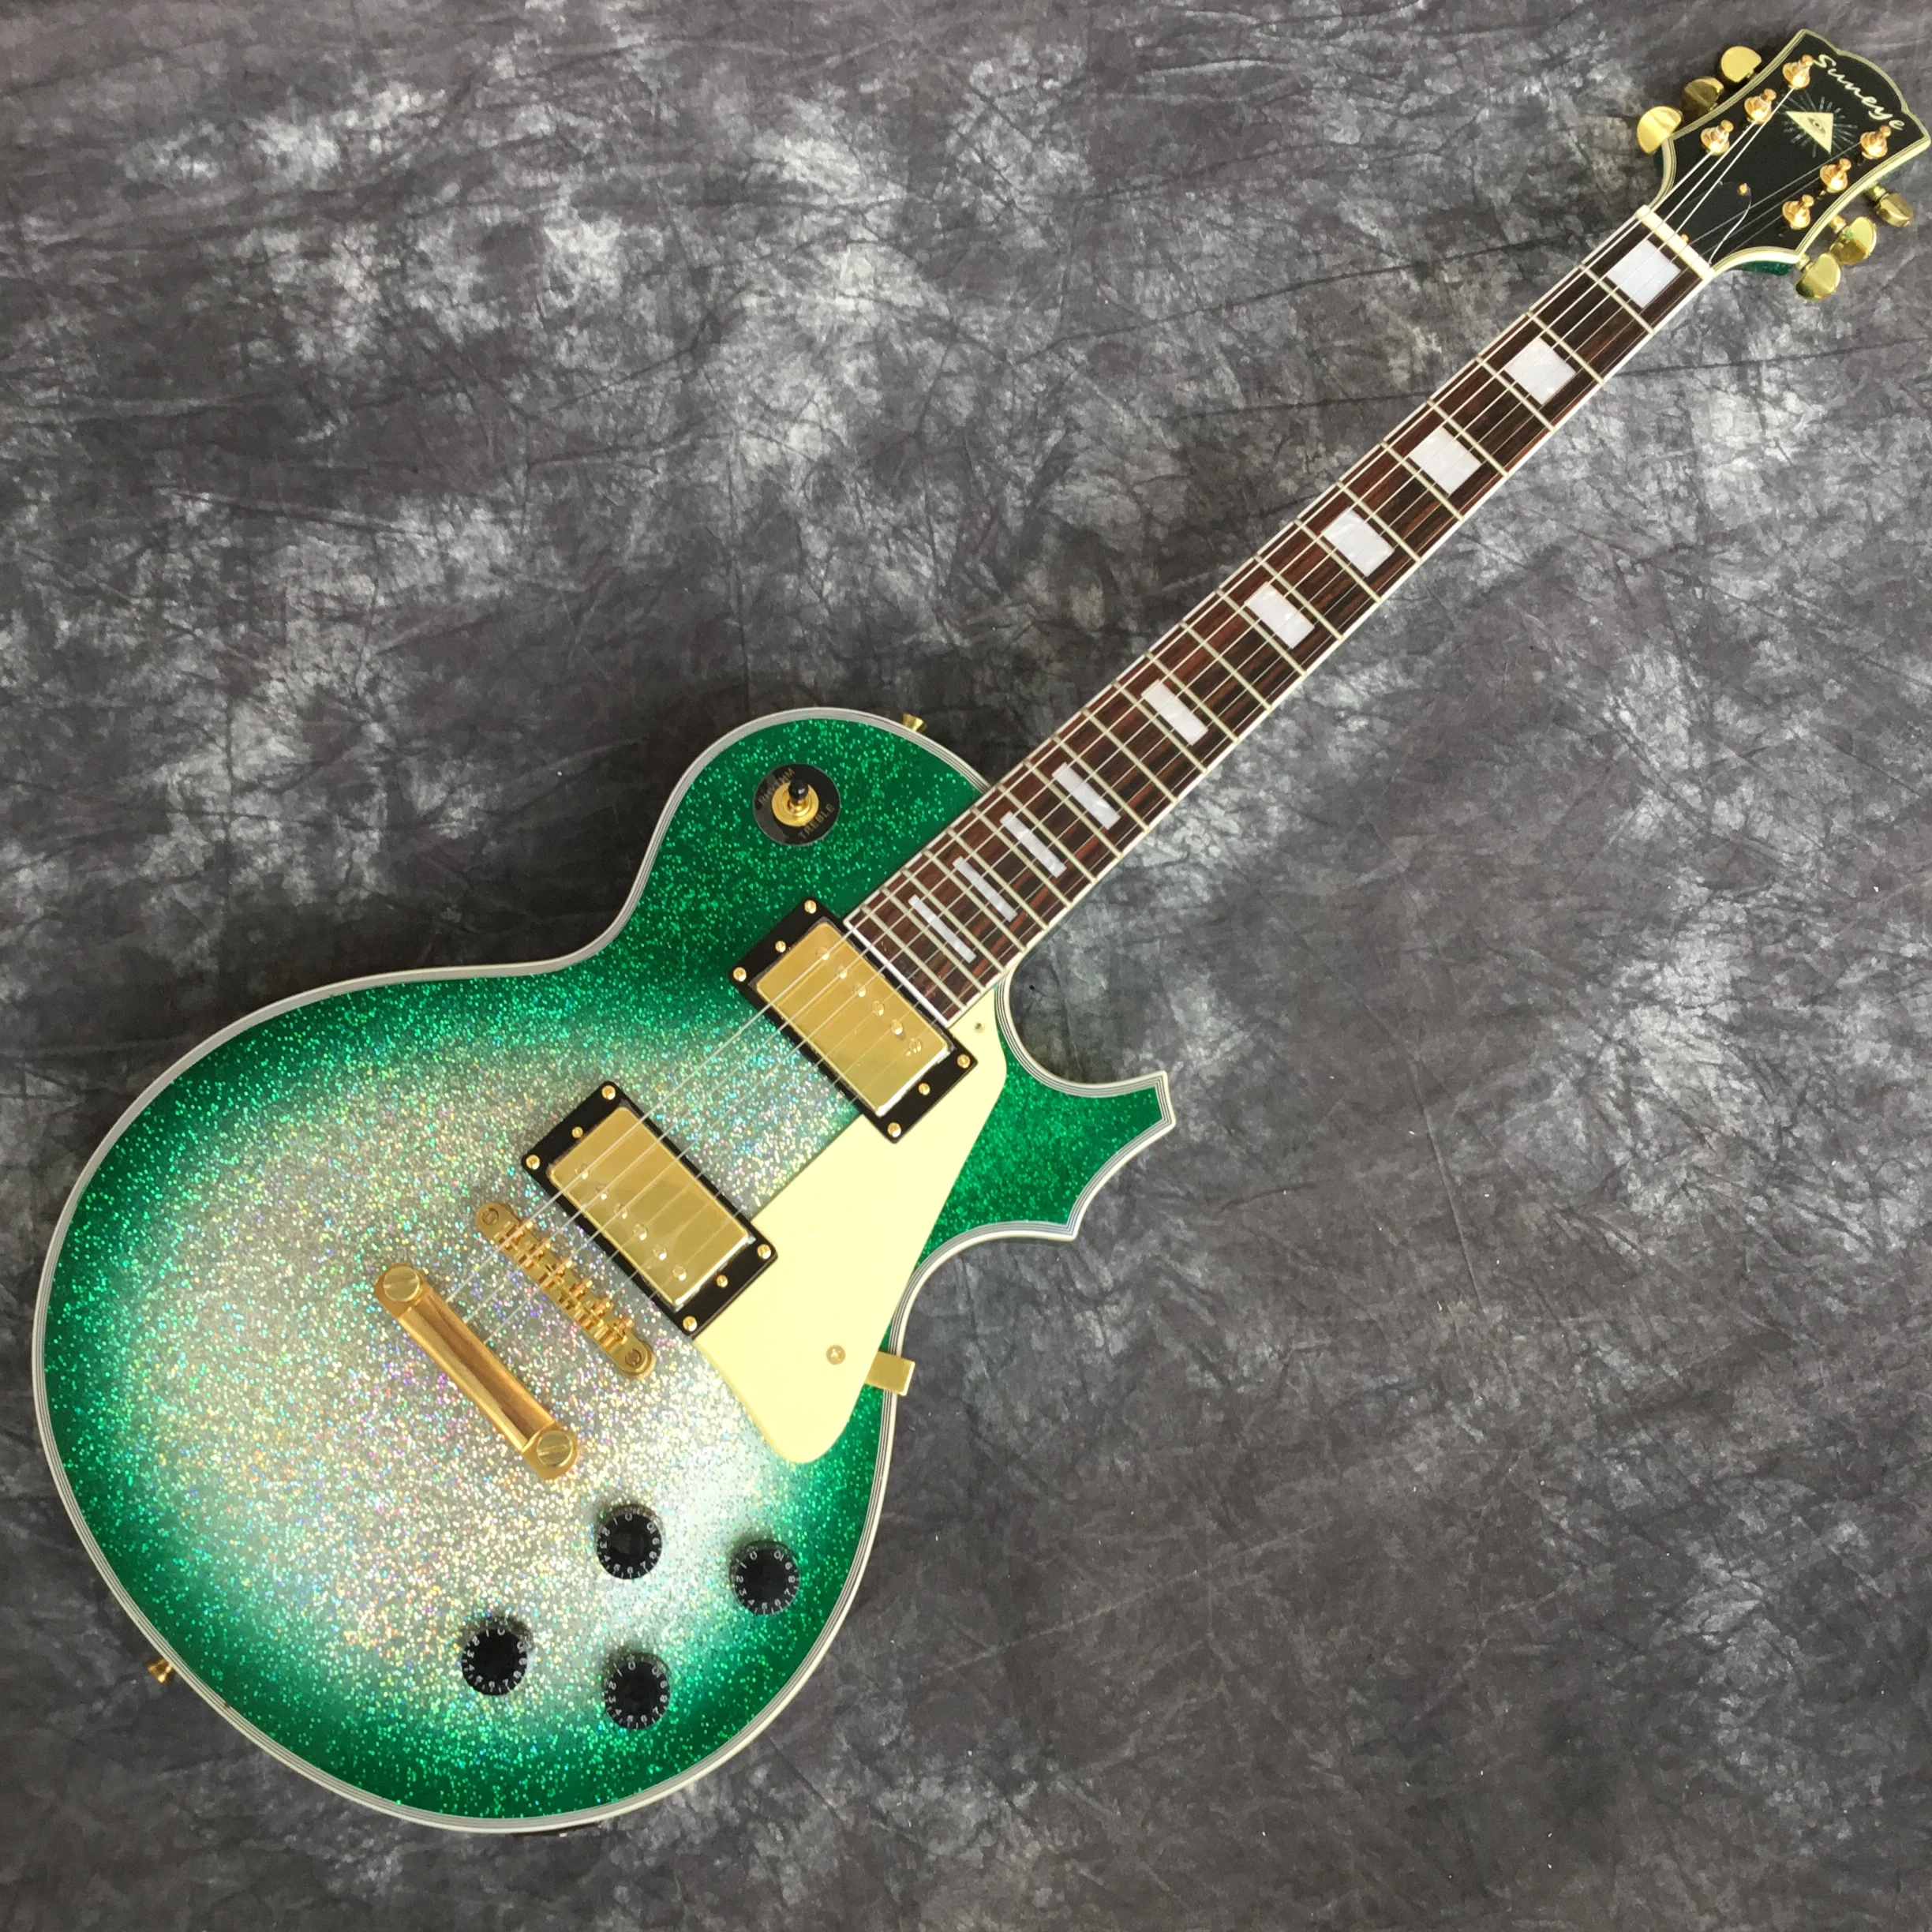 Фото 2019 High quality 6 String Electric Guitar Mahogany body With Metallic green paint top Golden hardware free shipping | Спорт и